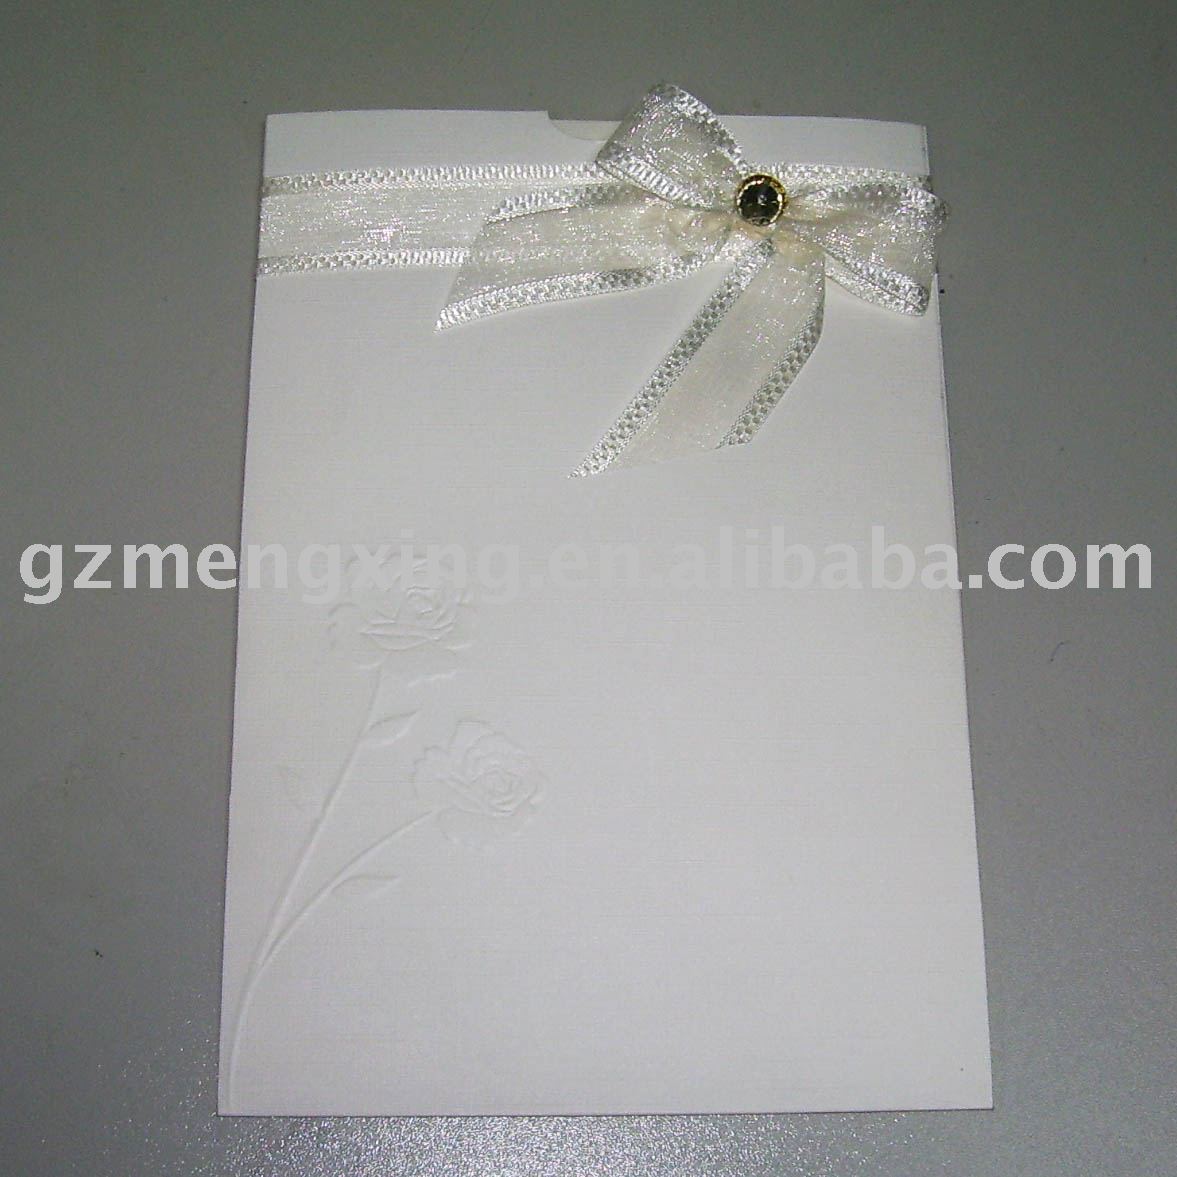 handmade wedding invitation cards wordings